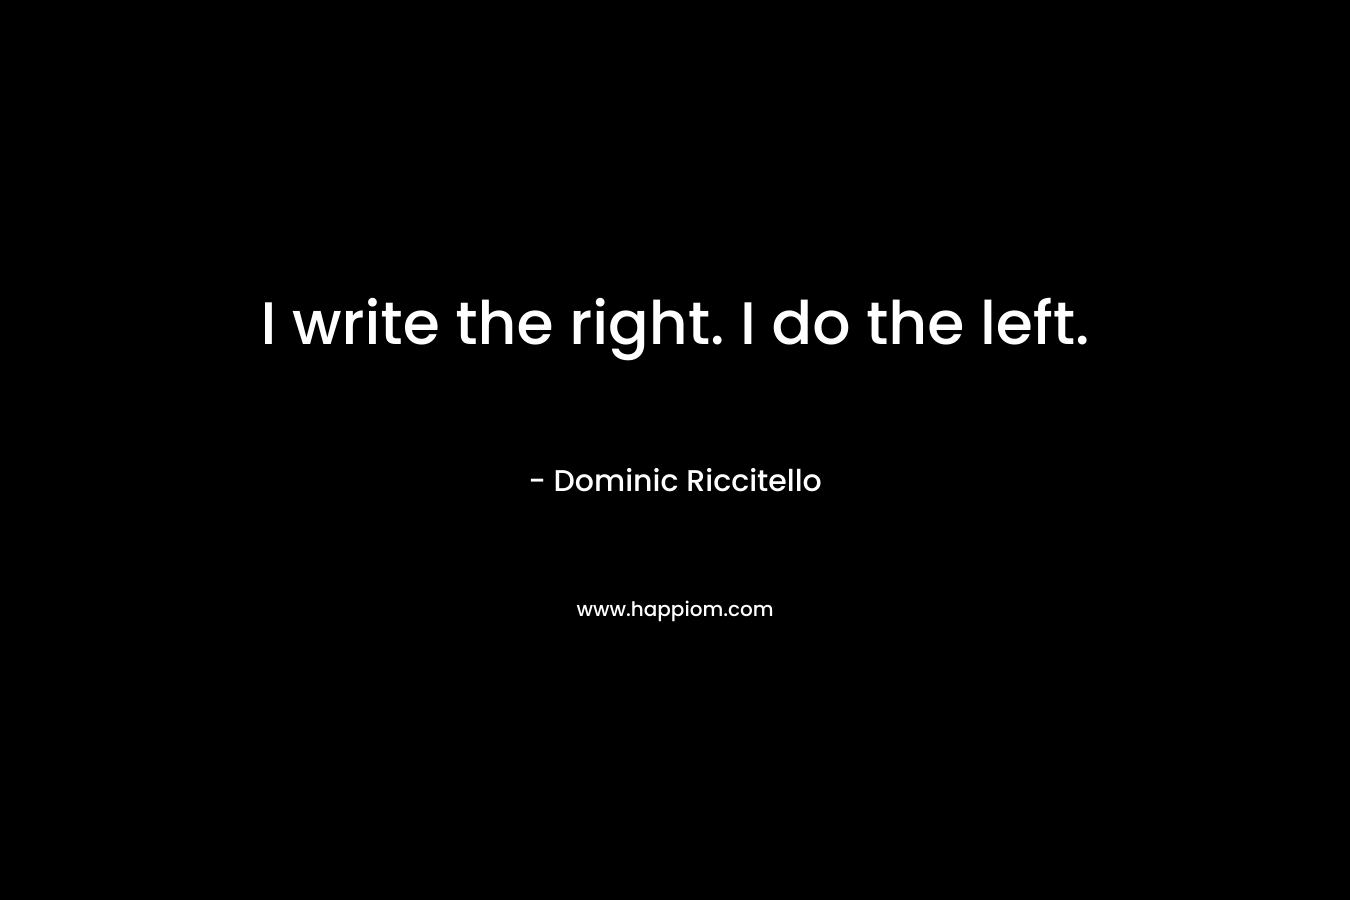 I write the right. I do the left.